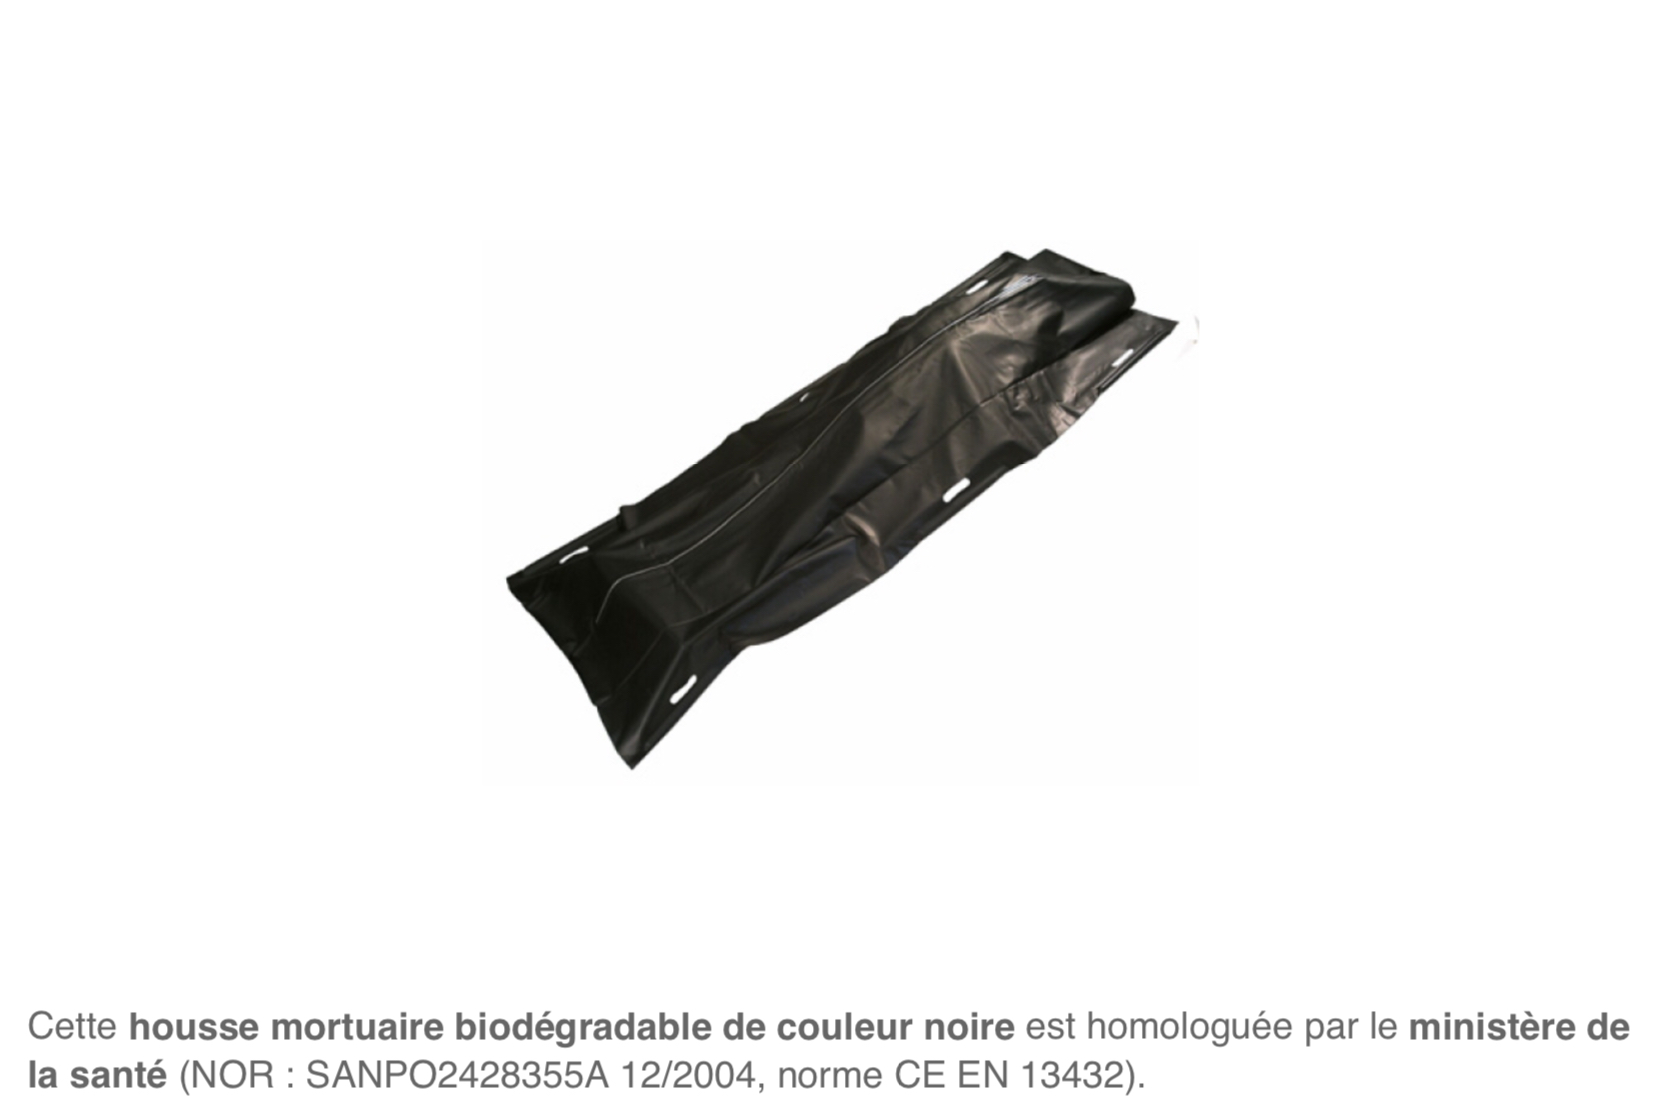 https://www.ylea.eu/housse-mortuaire-biodegradable-b10396.html